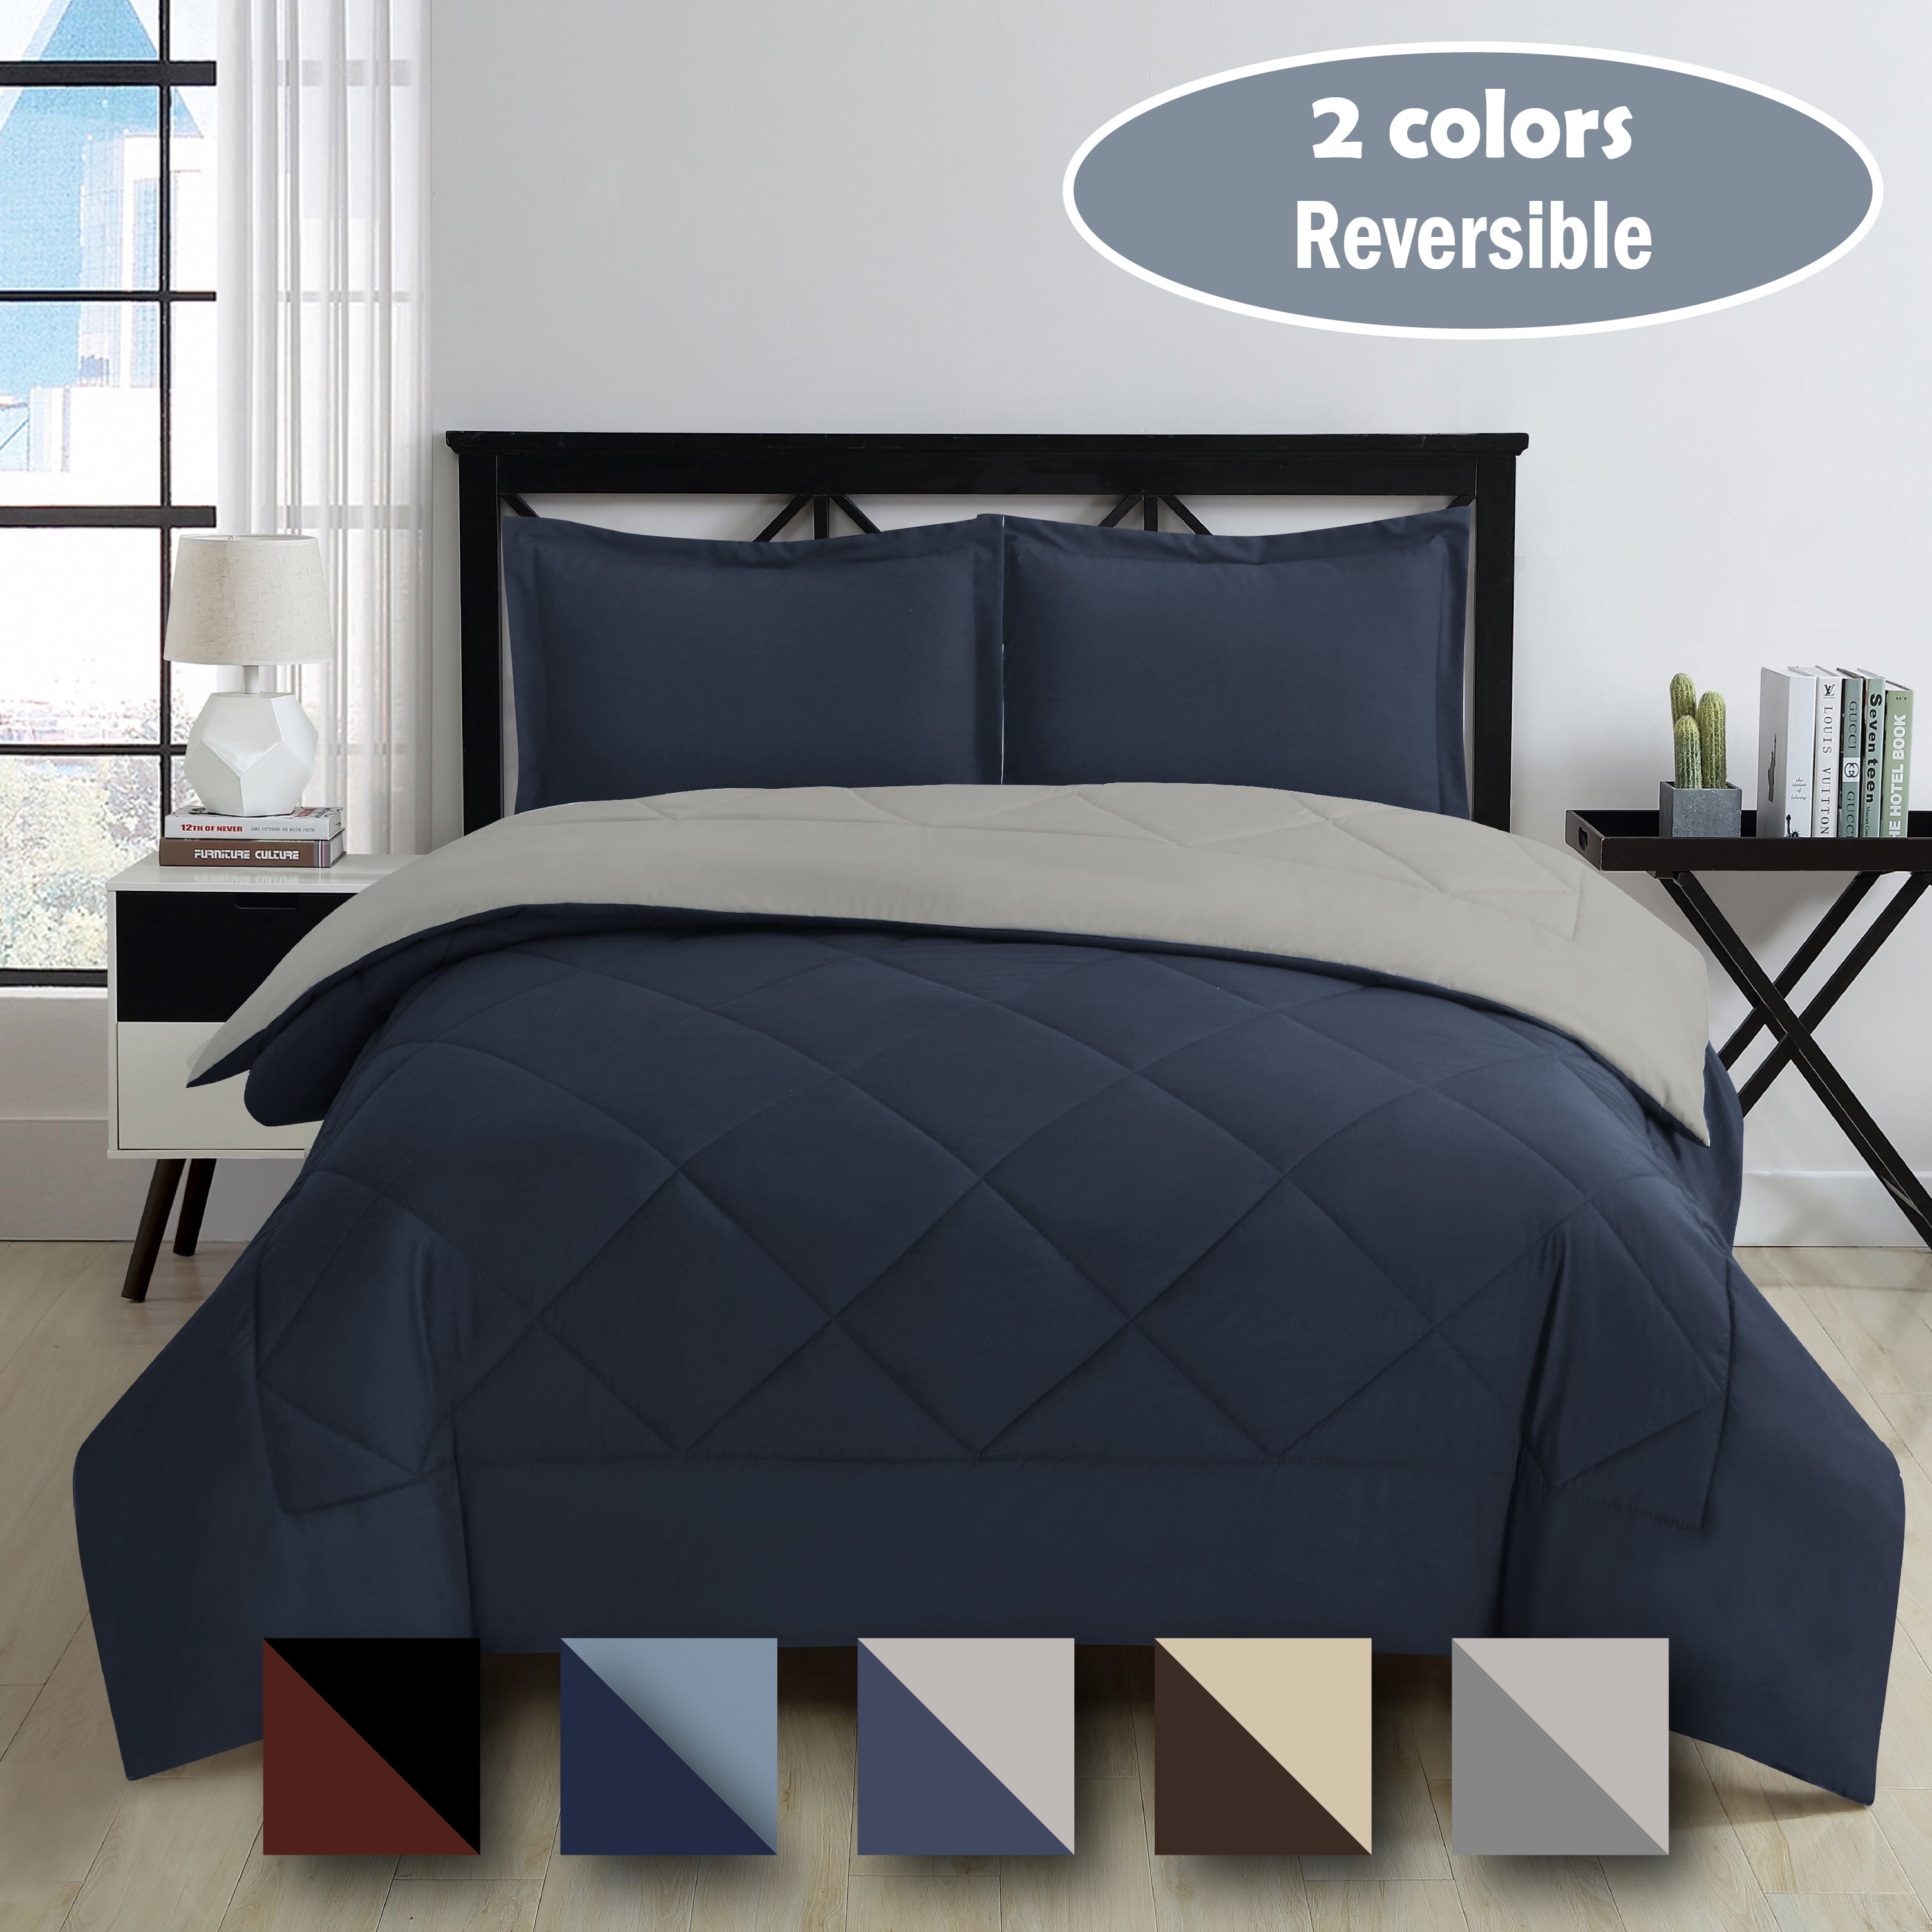 Full/Queen 2 Colors Reversible All Season Comforter & Sham Set